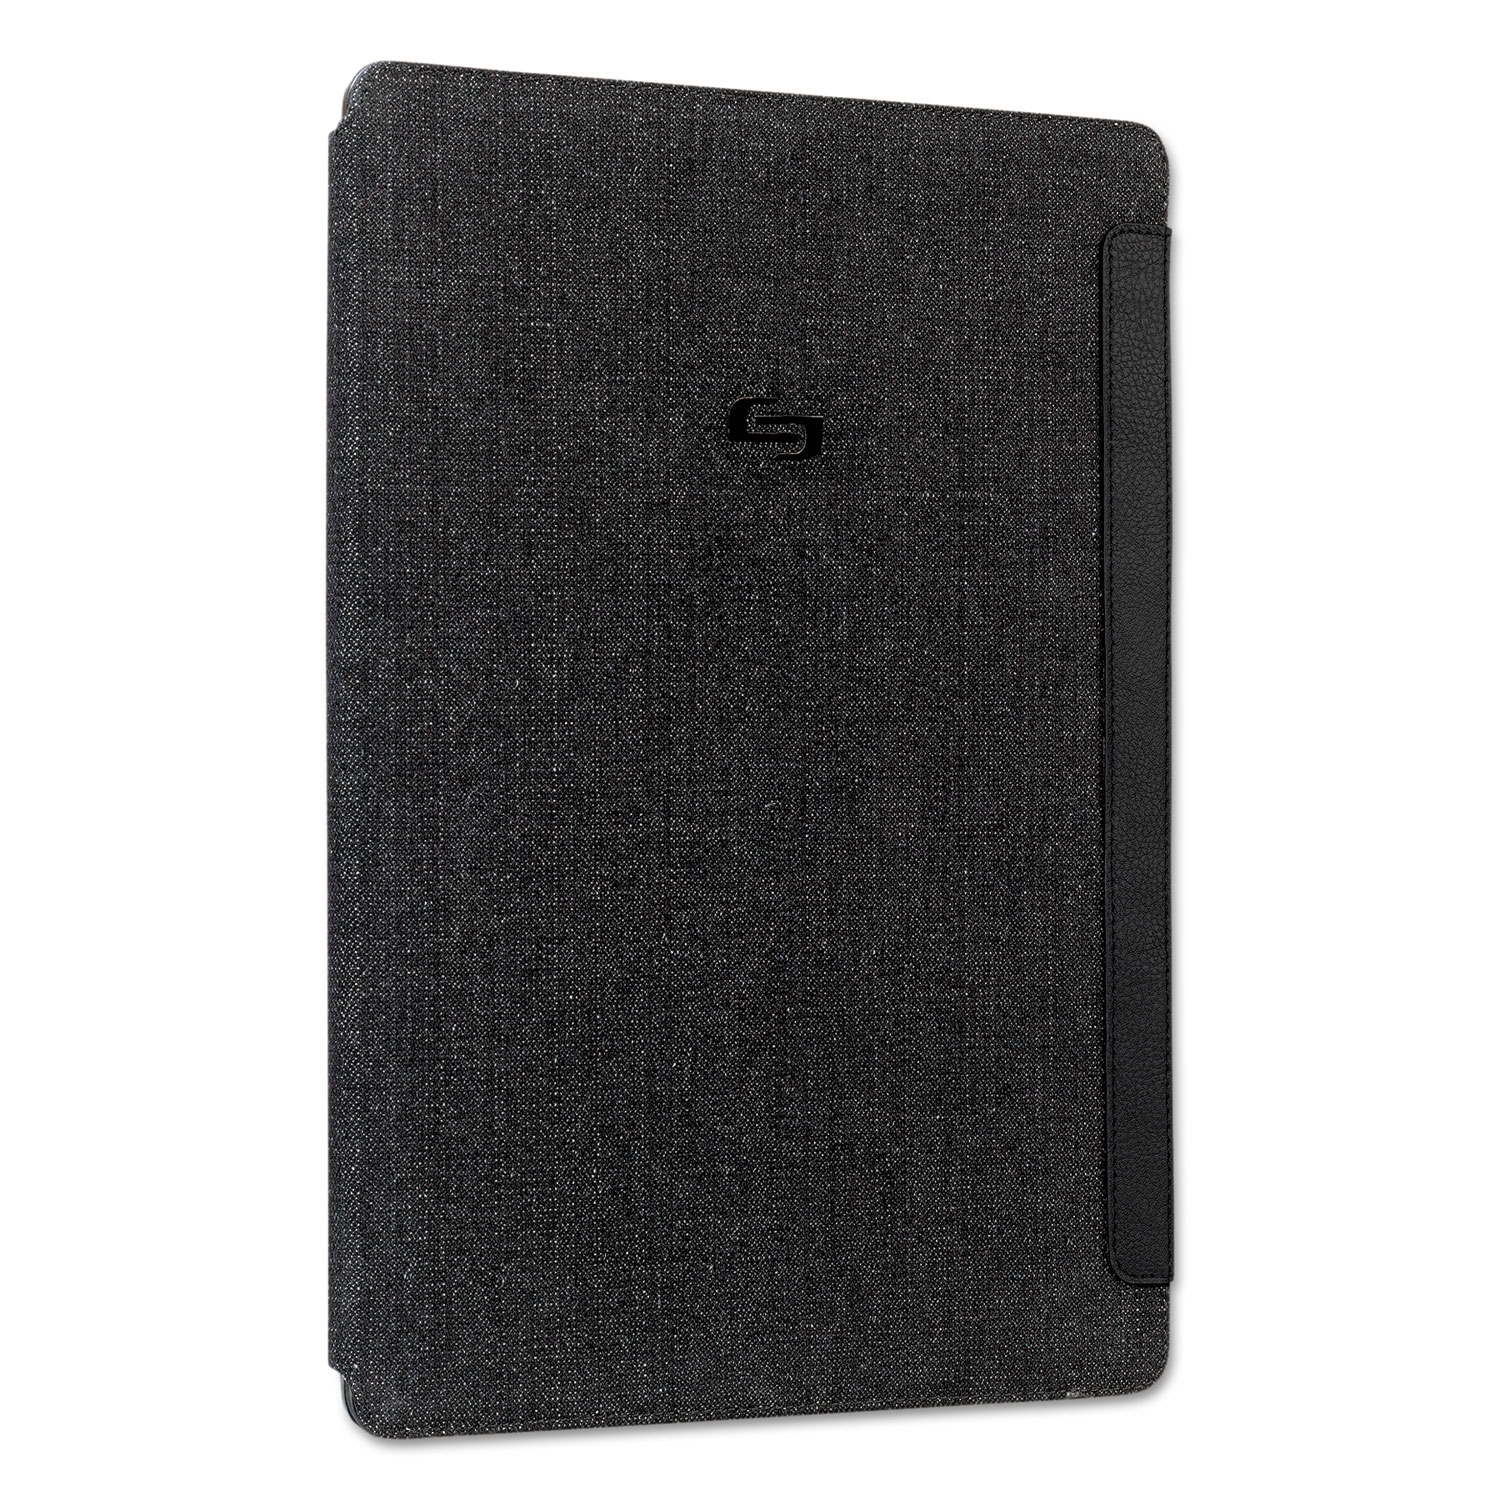 Sentinel Slim Case for iPad Pro, Black